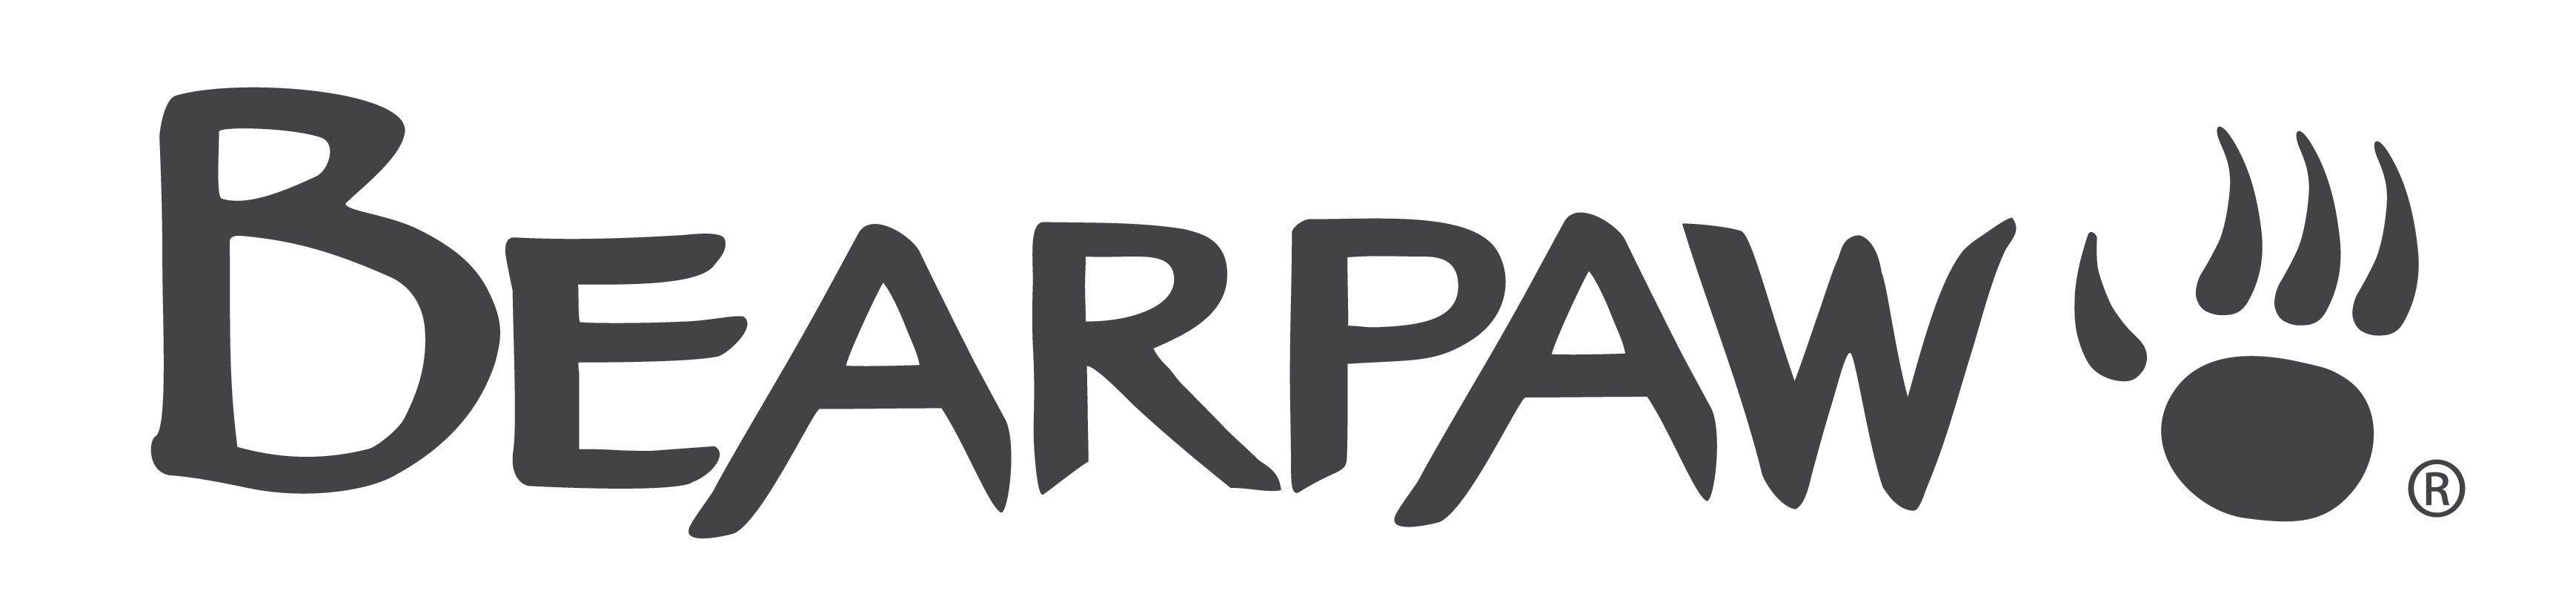 PS 60 Paw Logo - Hats - Socks/Accessories | Bearpaw.com